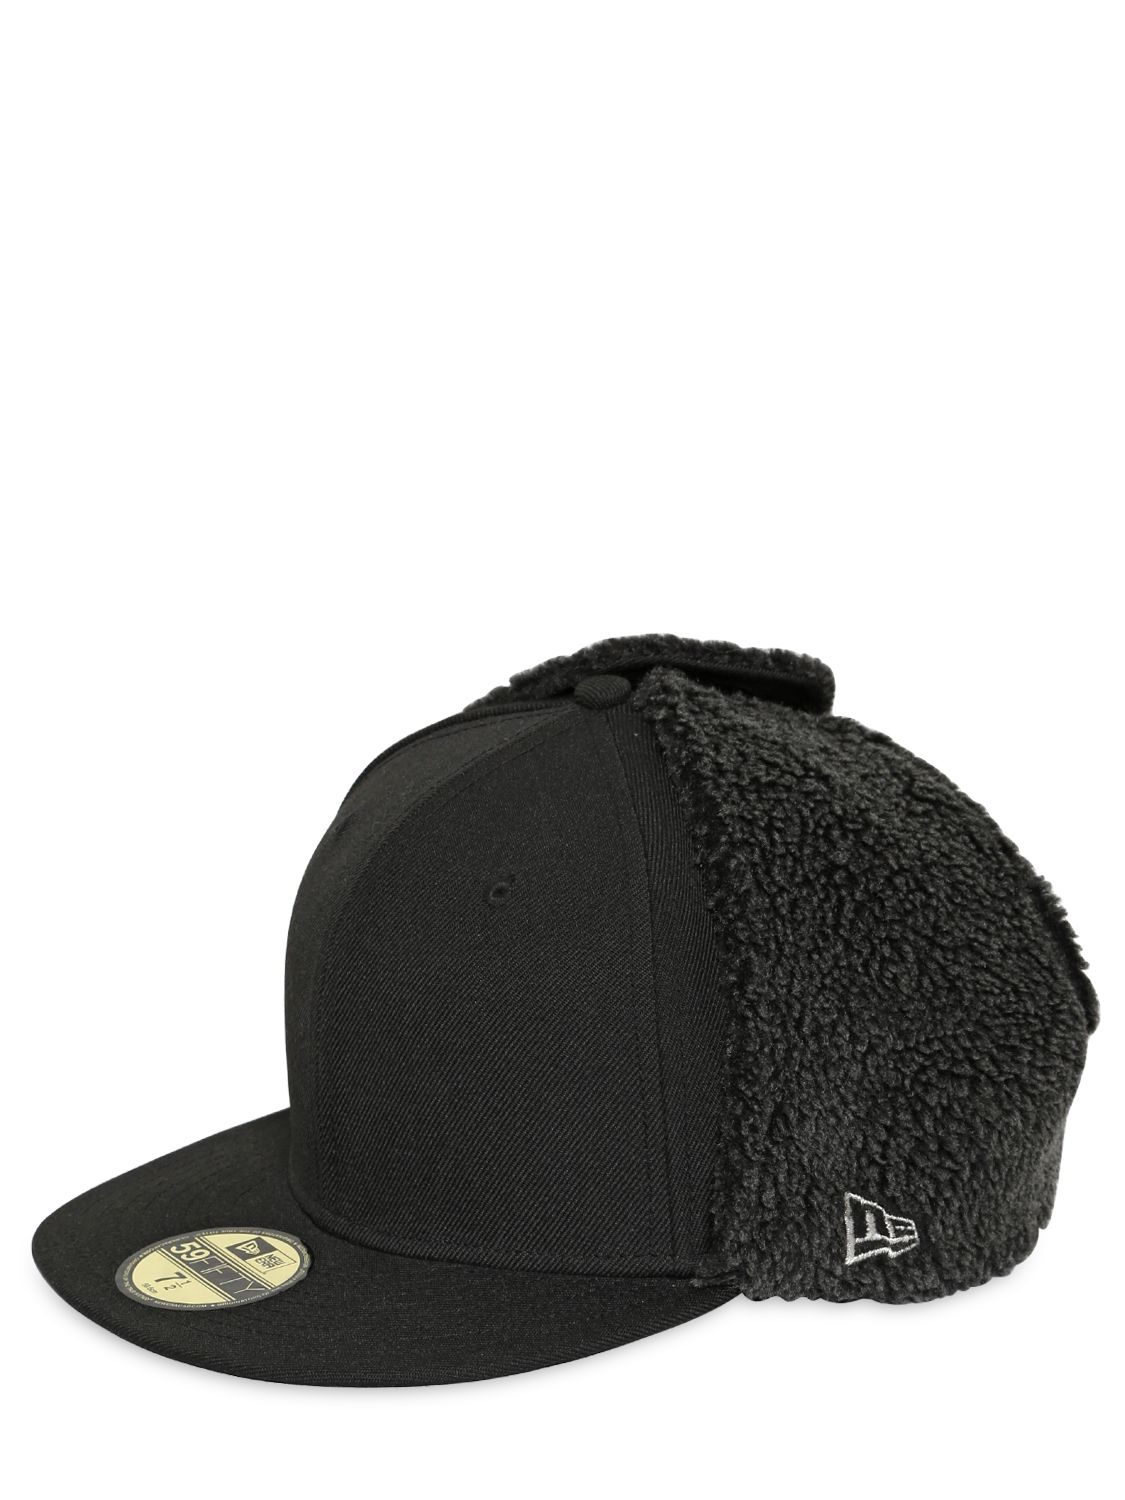 Yohji Yamamoto Wool Baseball Hat With Ear Flaps in Black for Men | Lyst